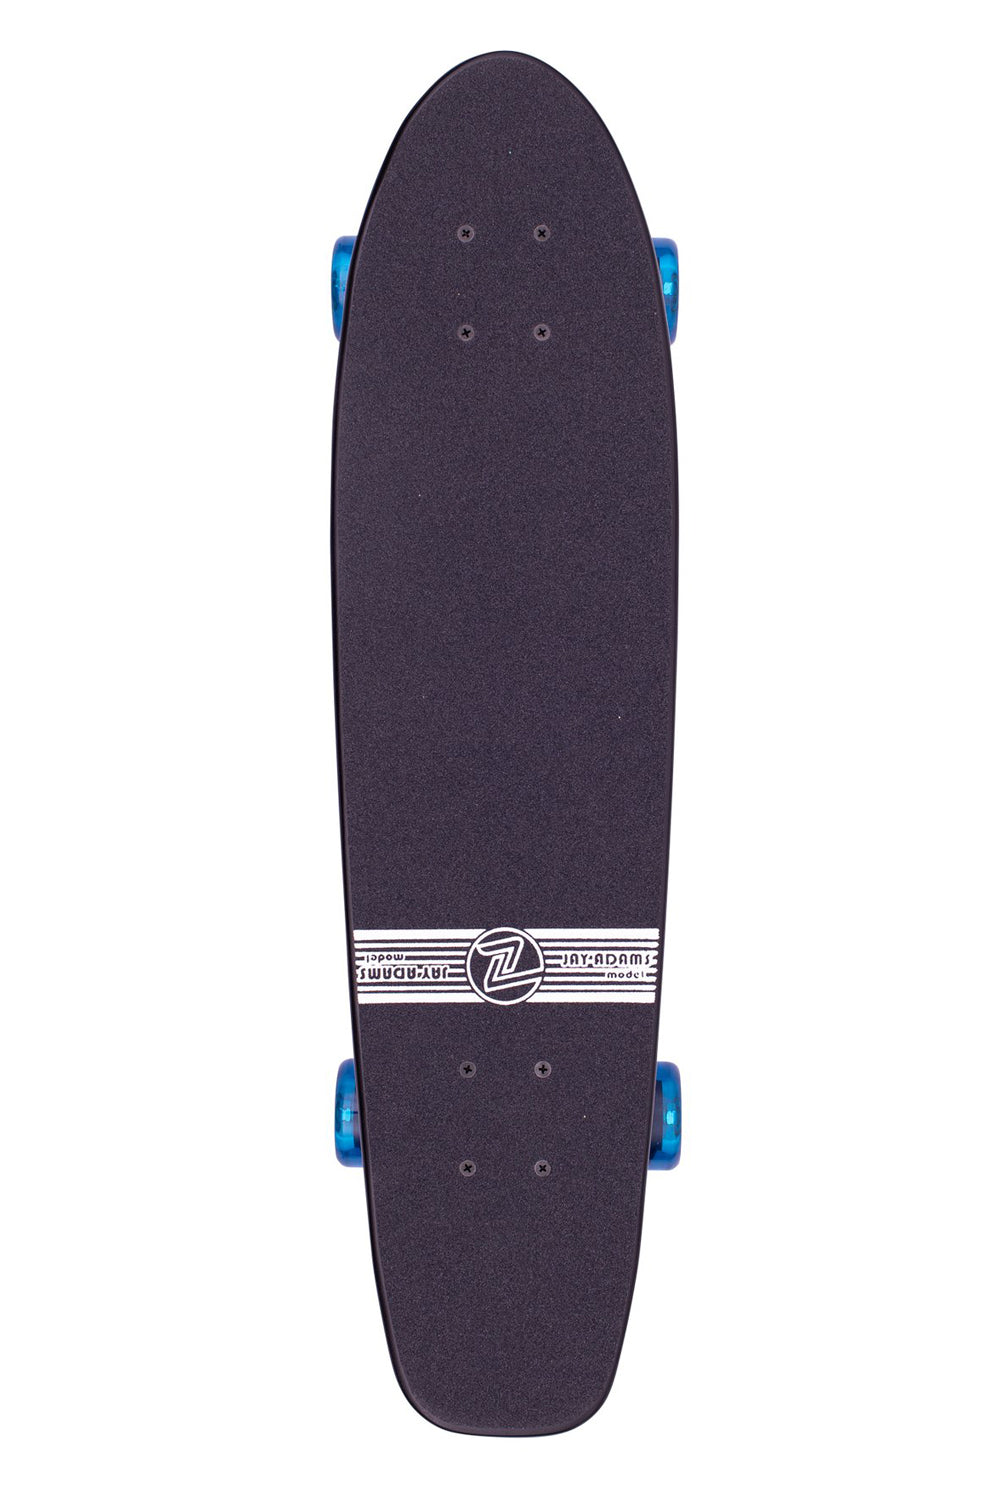 ZFLEX Metal Flake Blue 29” Cruiser Skateboard